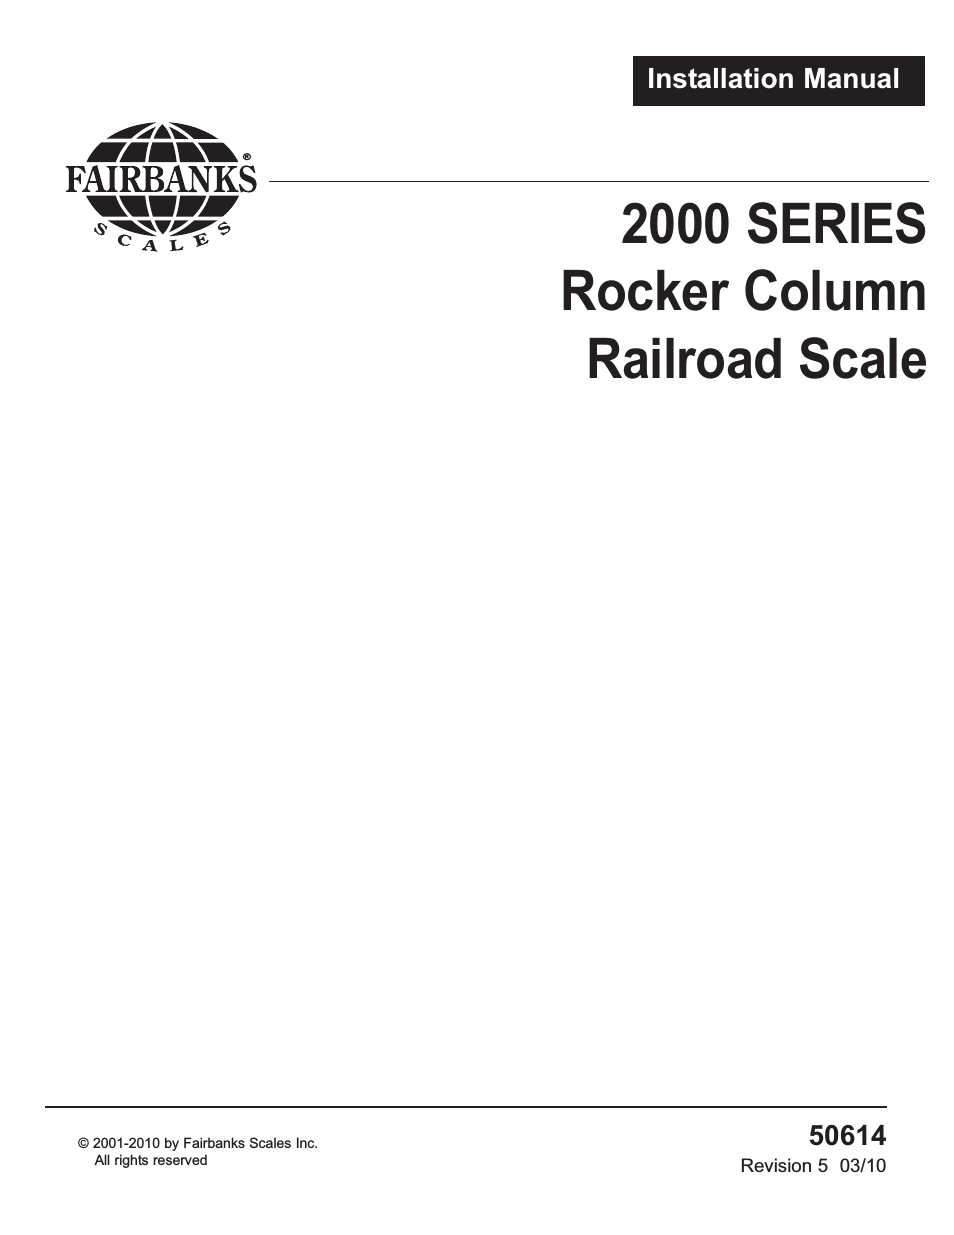 2000 SERIES Rocker Column Railroad Scale